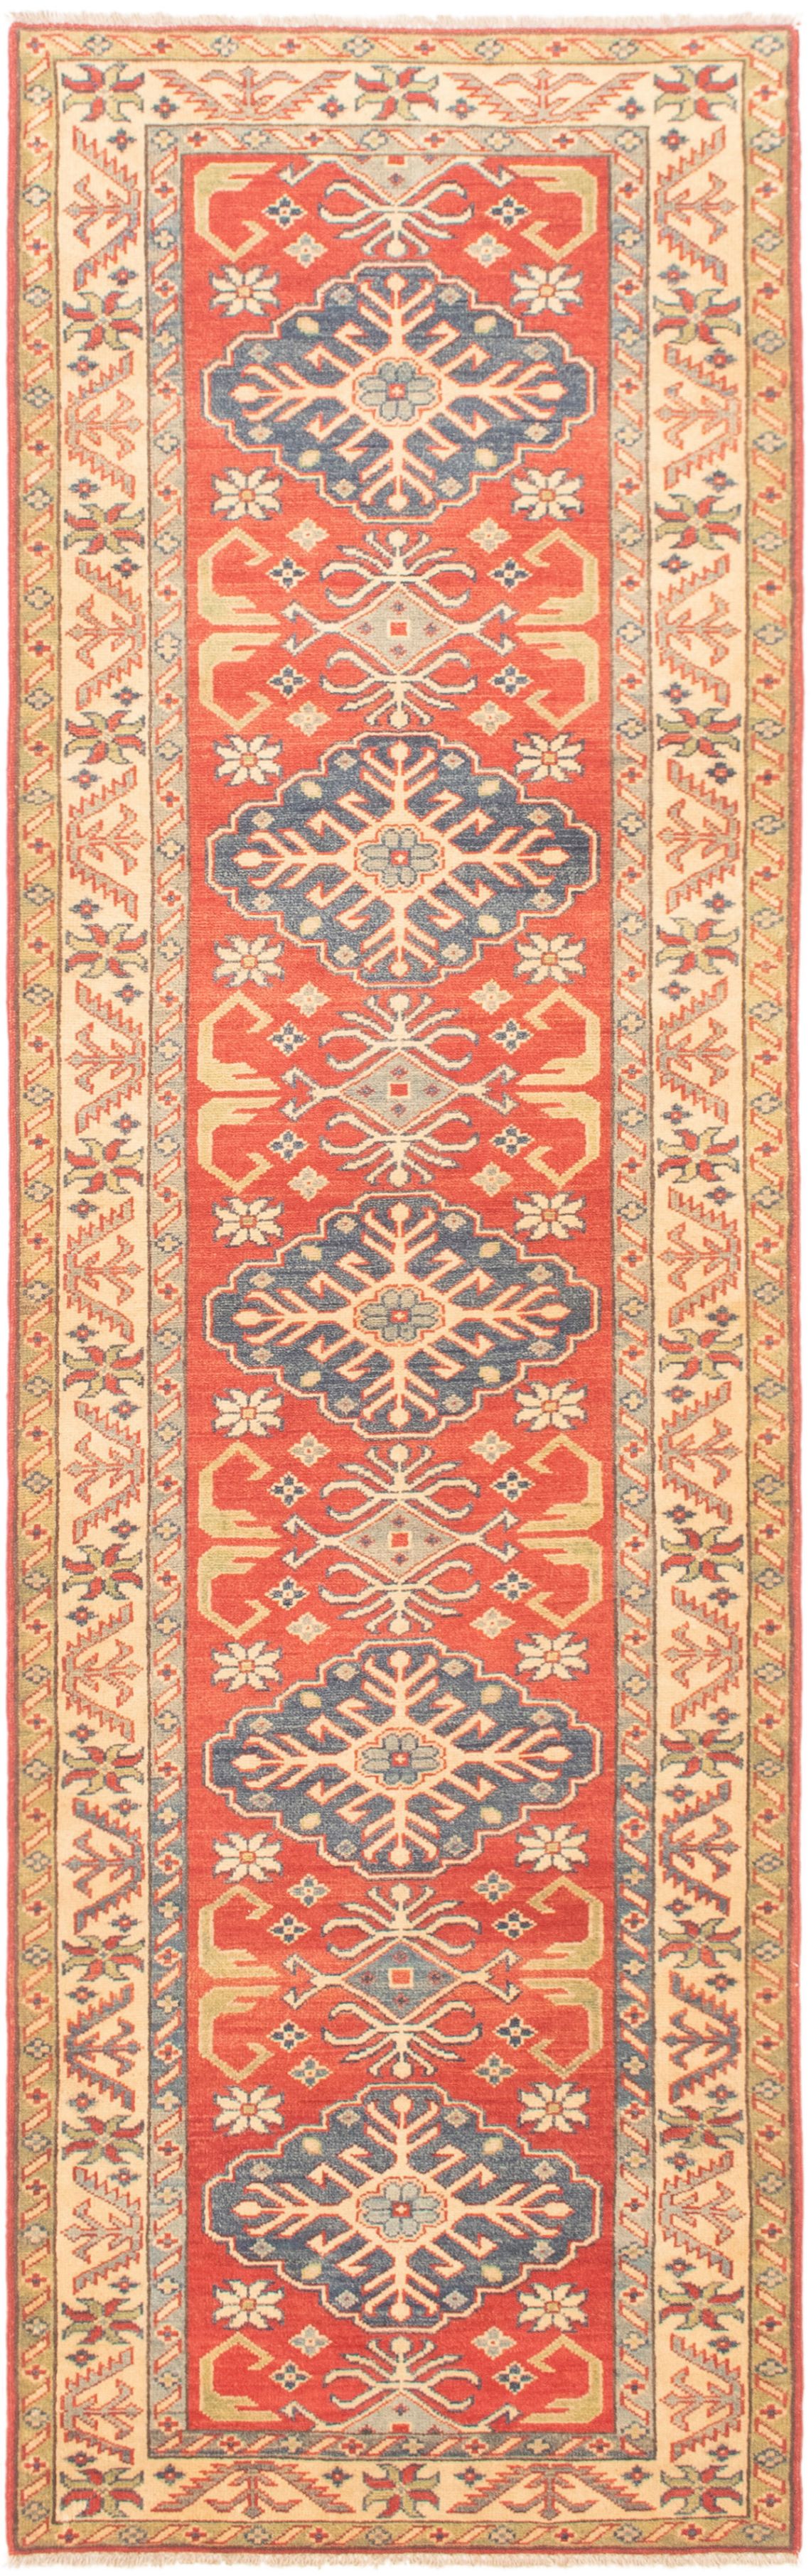 Hand-knotted Finest Gazni Dark Copper Wool Rug 2'10" x 9'10"  Size: 2'10" x 9'10"  